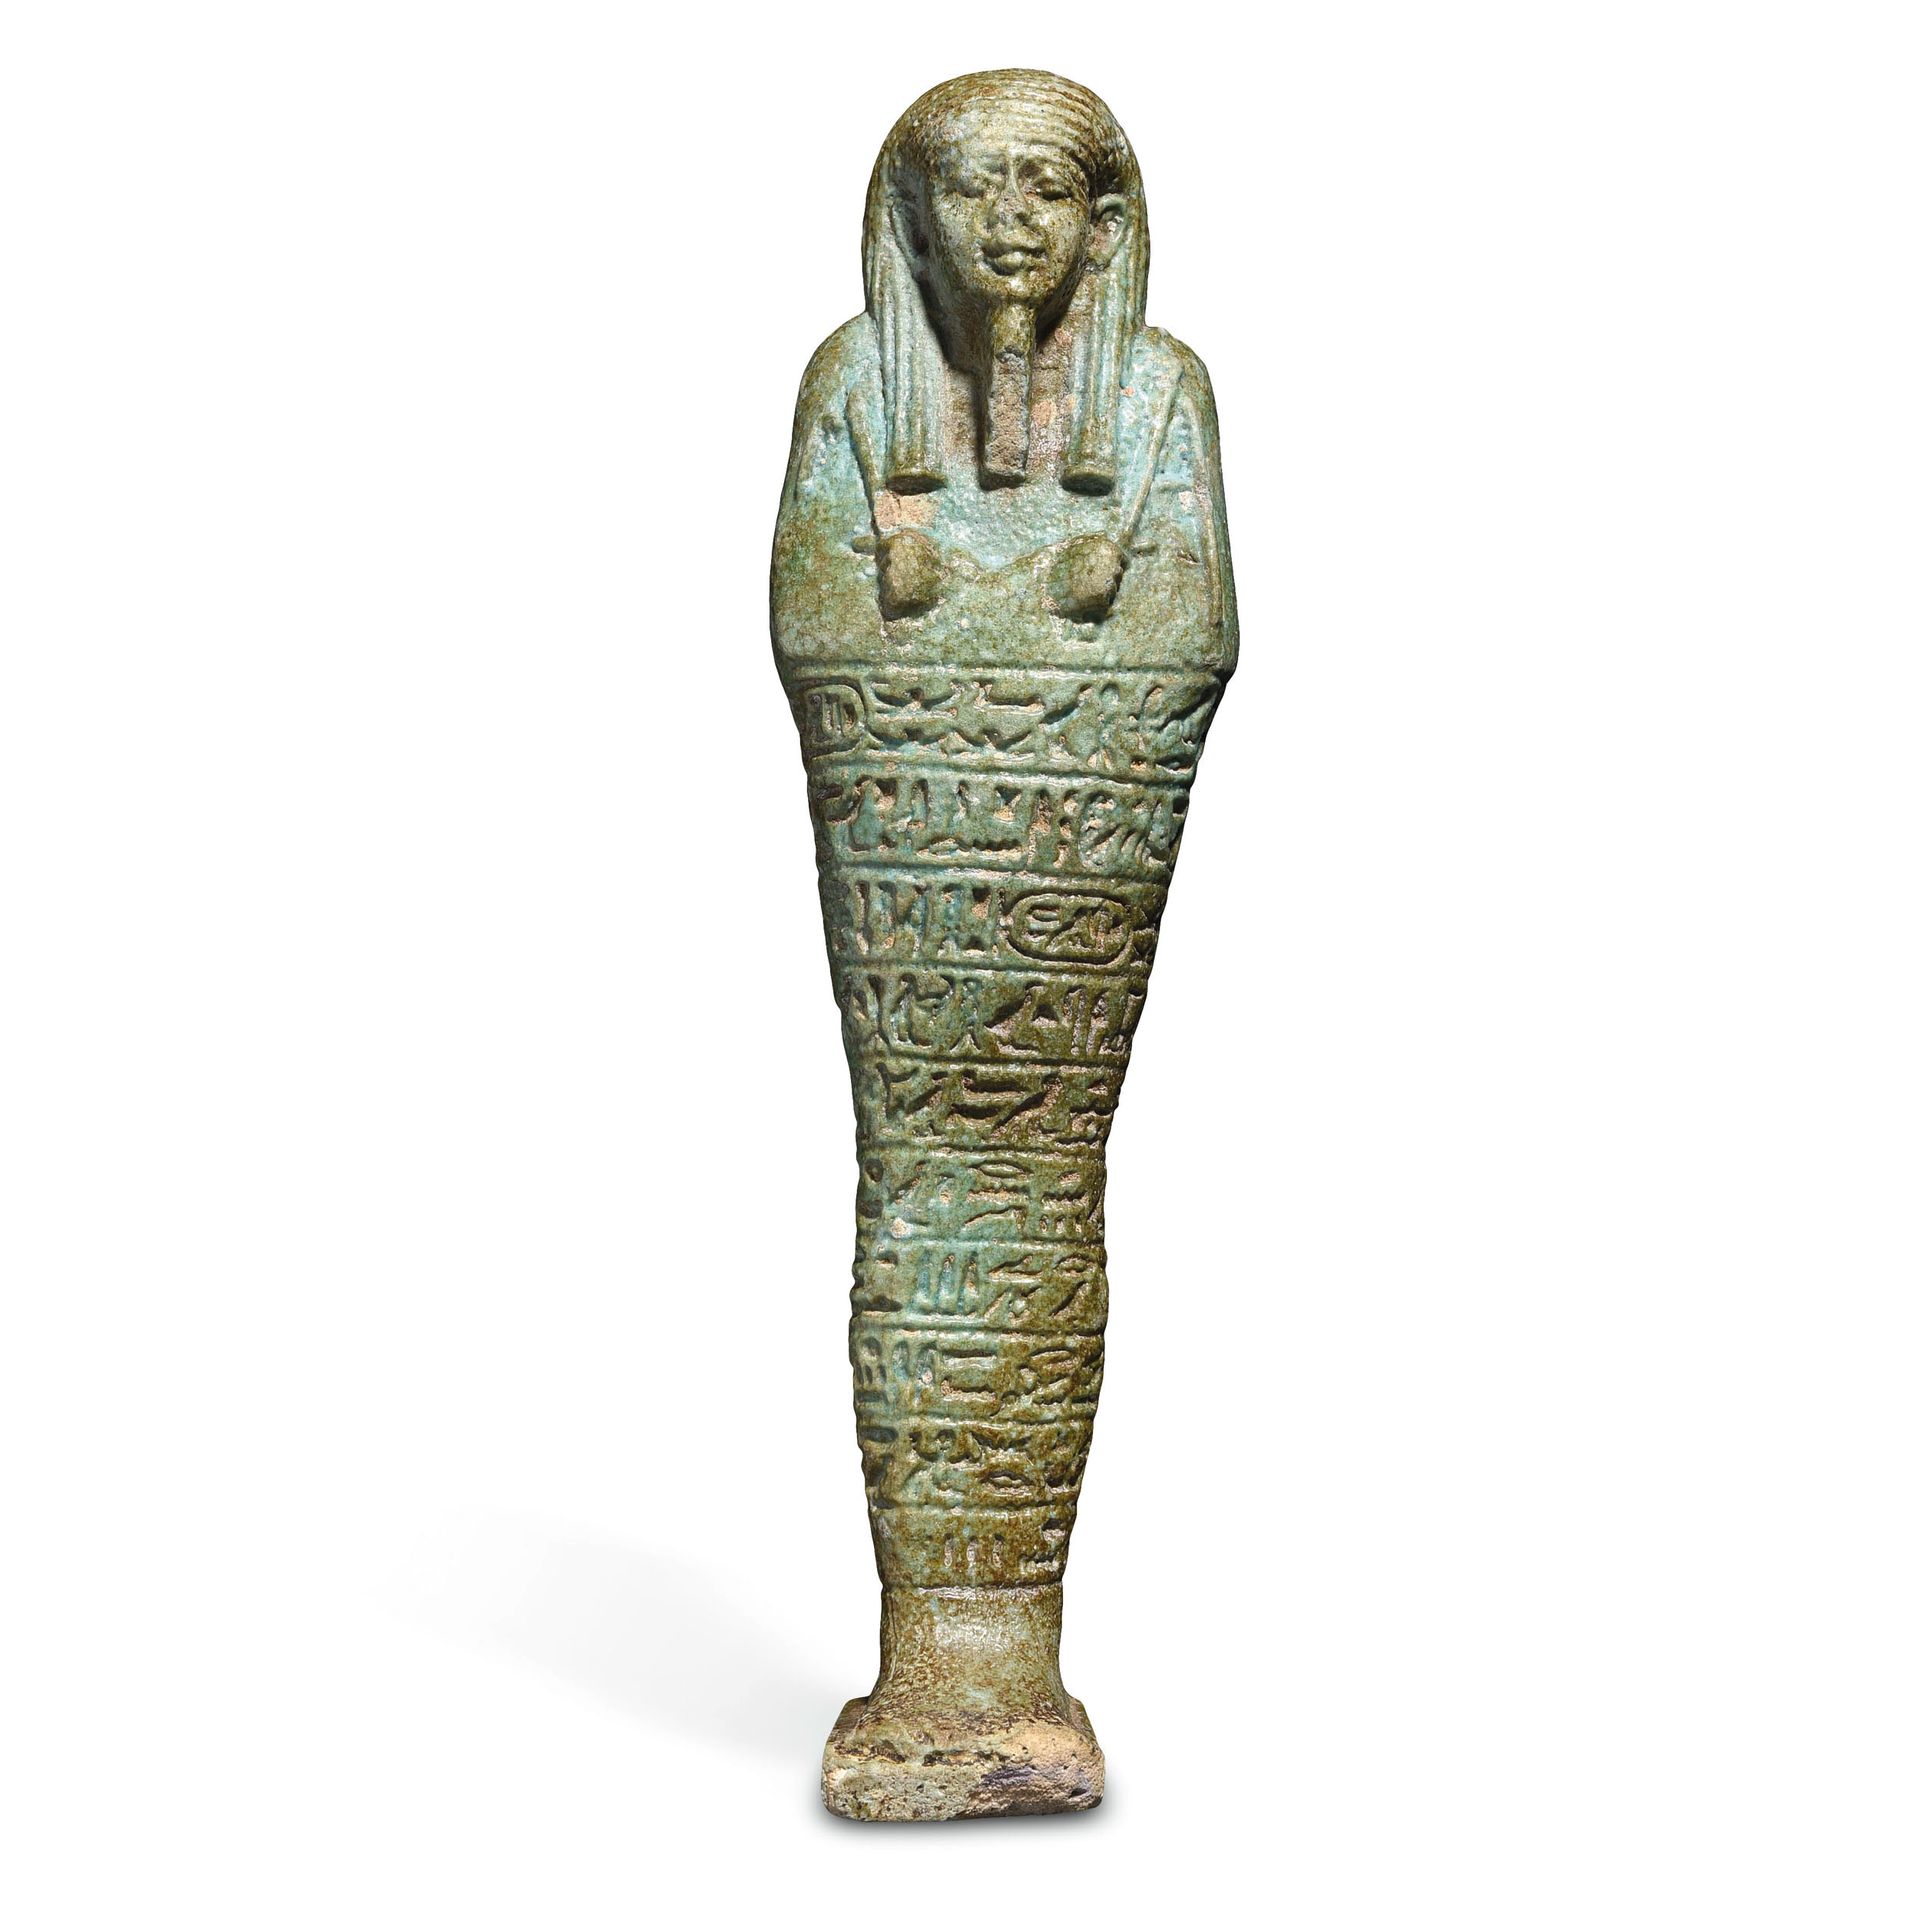 Null OUSHABTI NEL NOME DI PSAMETIK

Egitto, dinastia XXVI, 664-525 a.C.

Terraco&hellip;